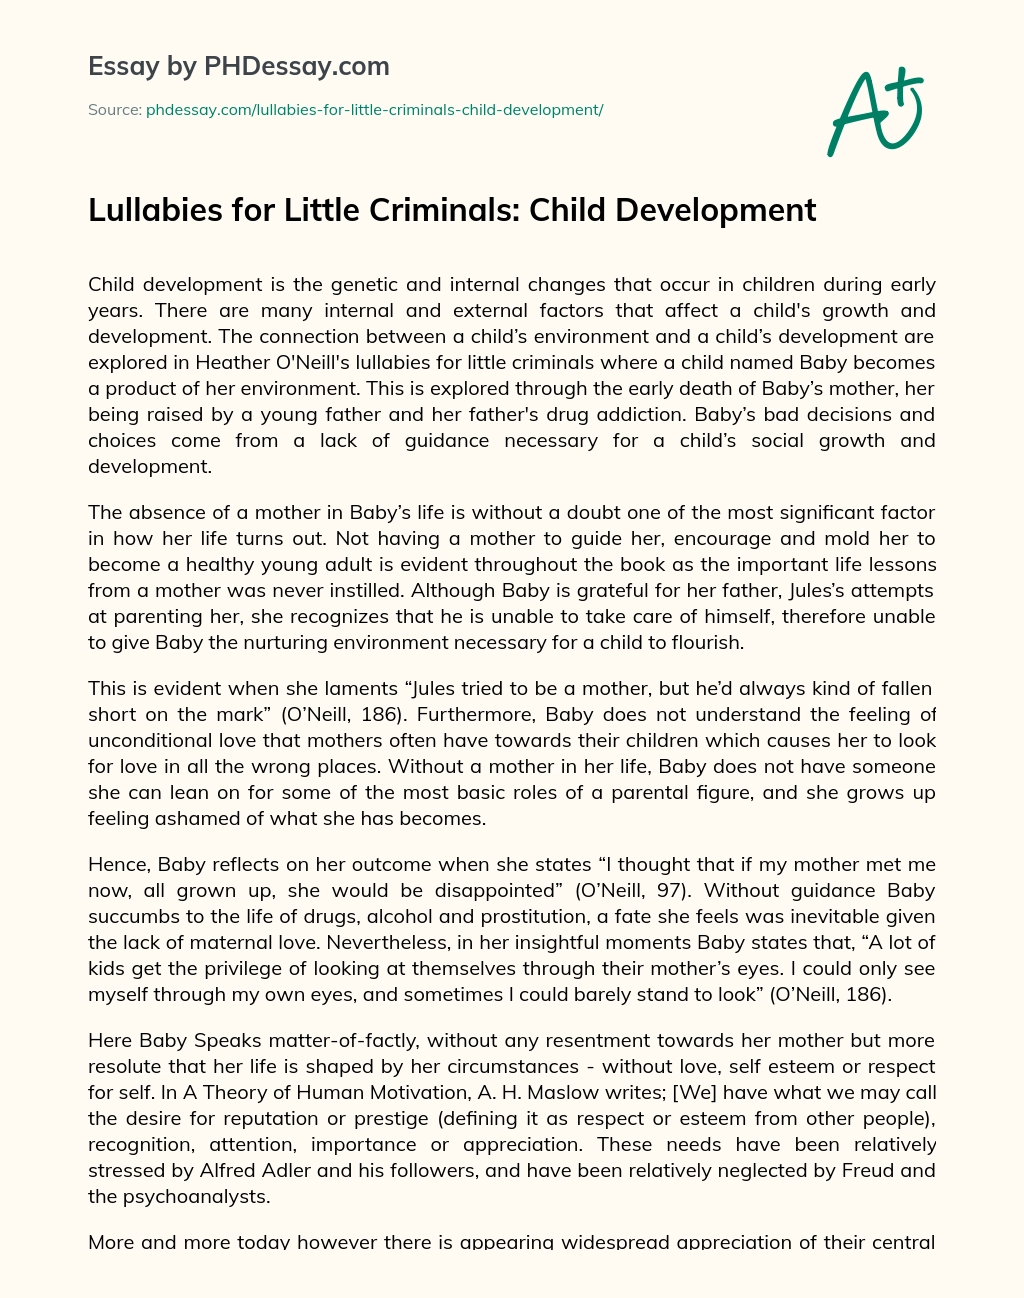 Lullabies for Little Criminals: Child Development essay